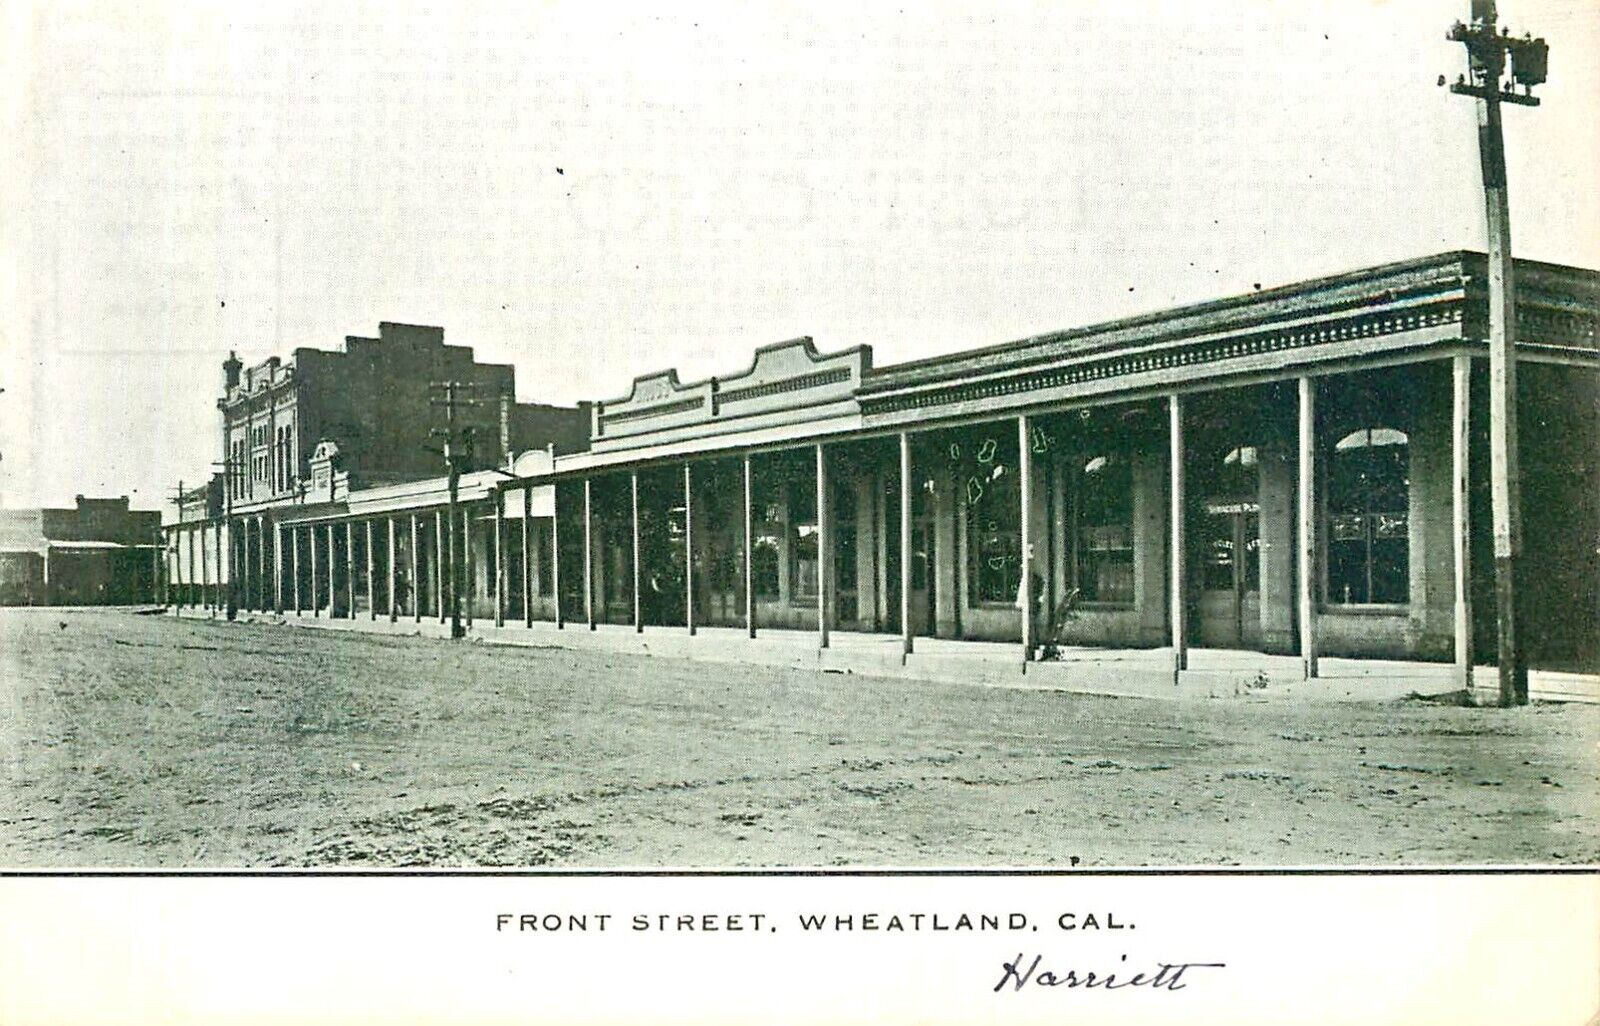 EARLY STREET SCENE c 1910, WHEATLAND, CALIFORNIA, VINTAGE POSTCARD (SV 376)